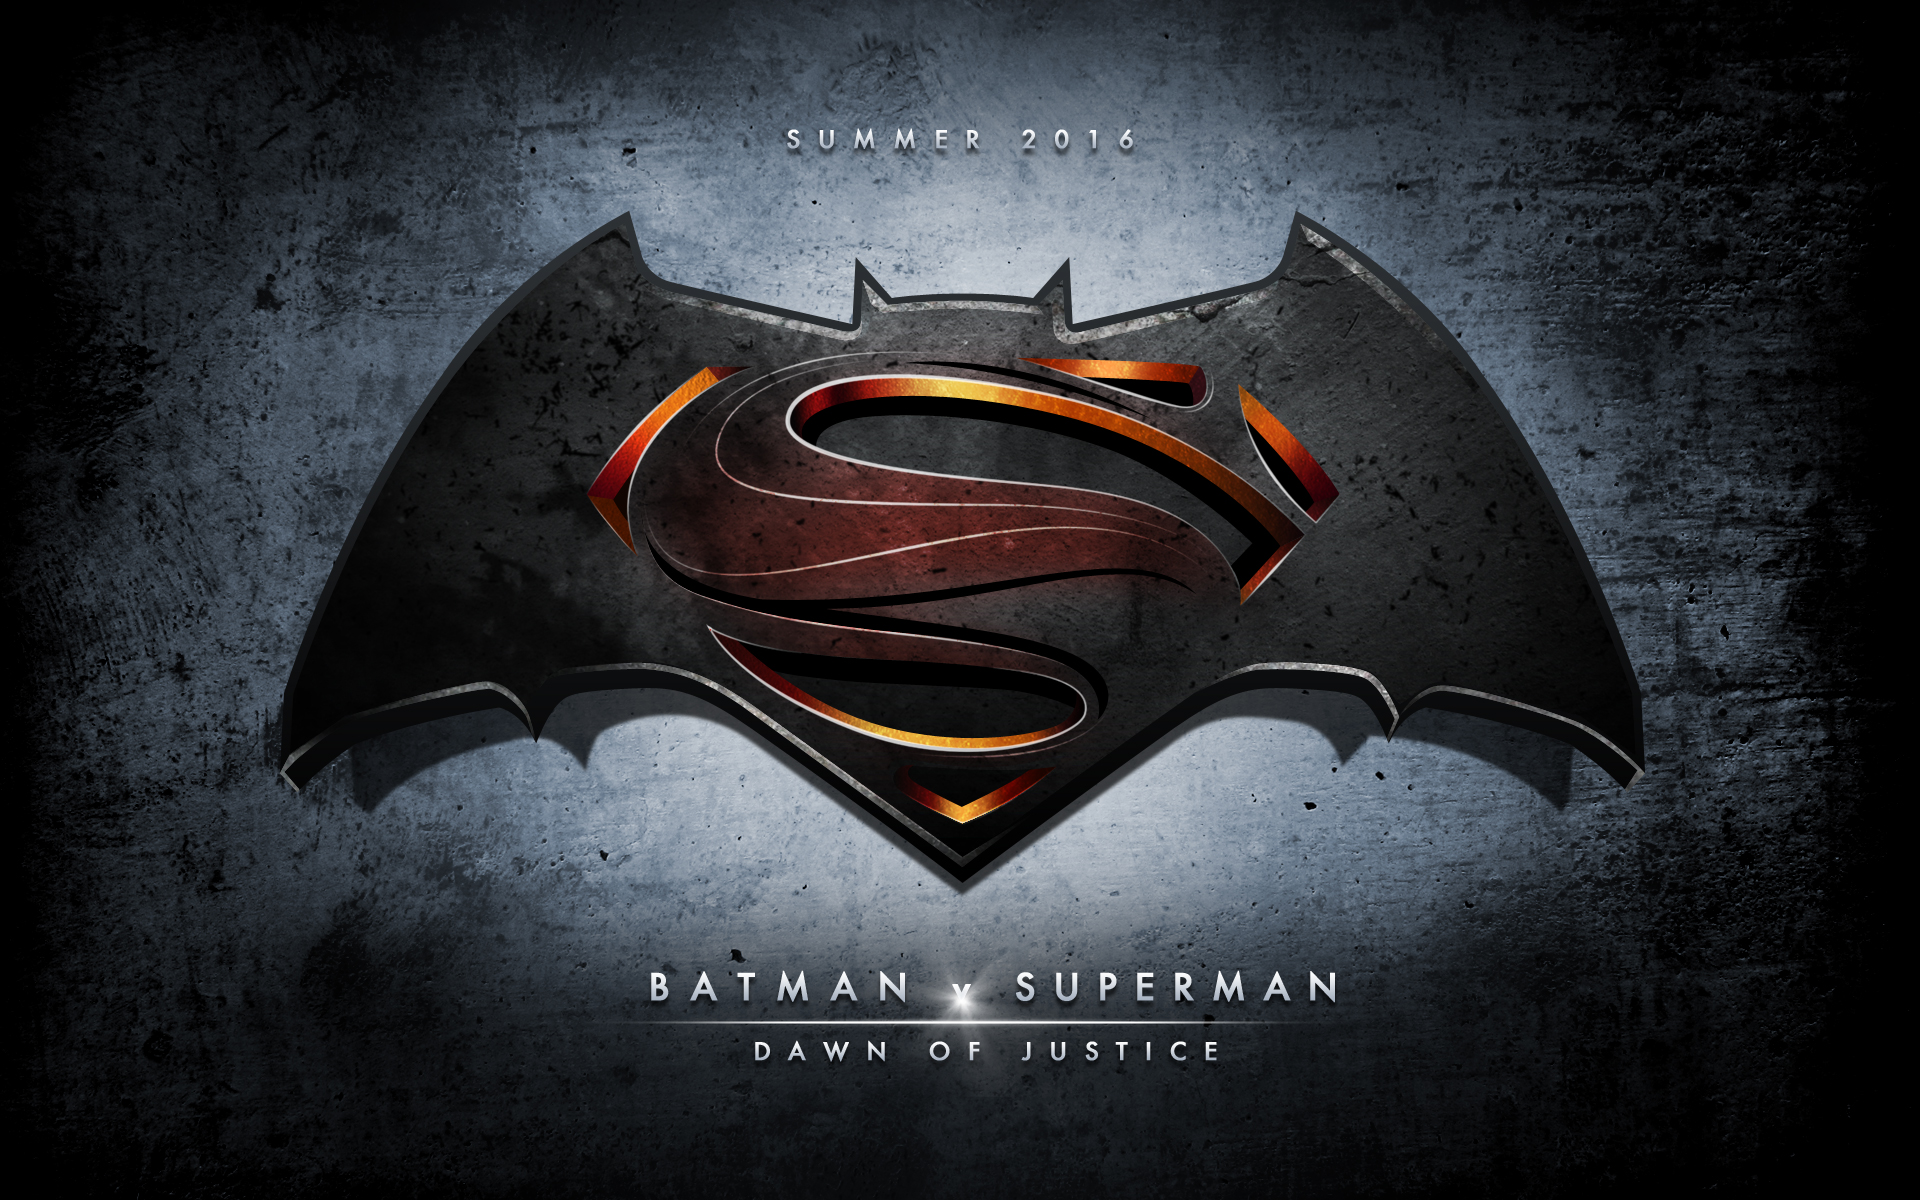 batman vs superman full movie download hd